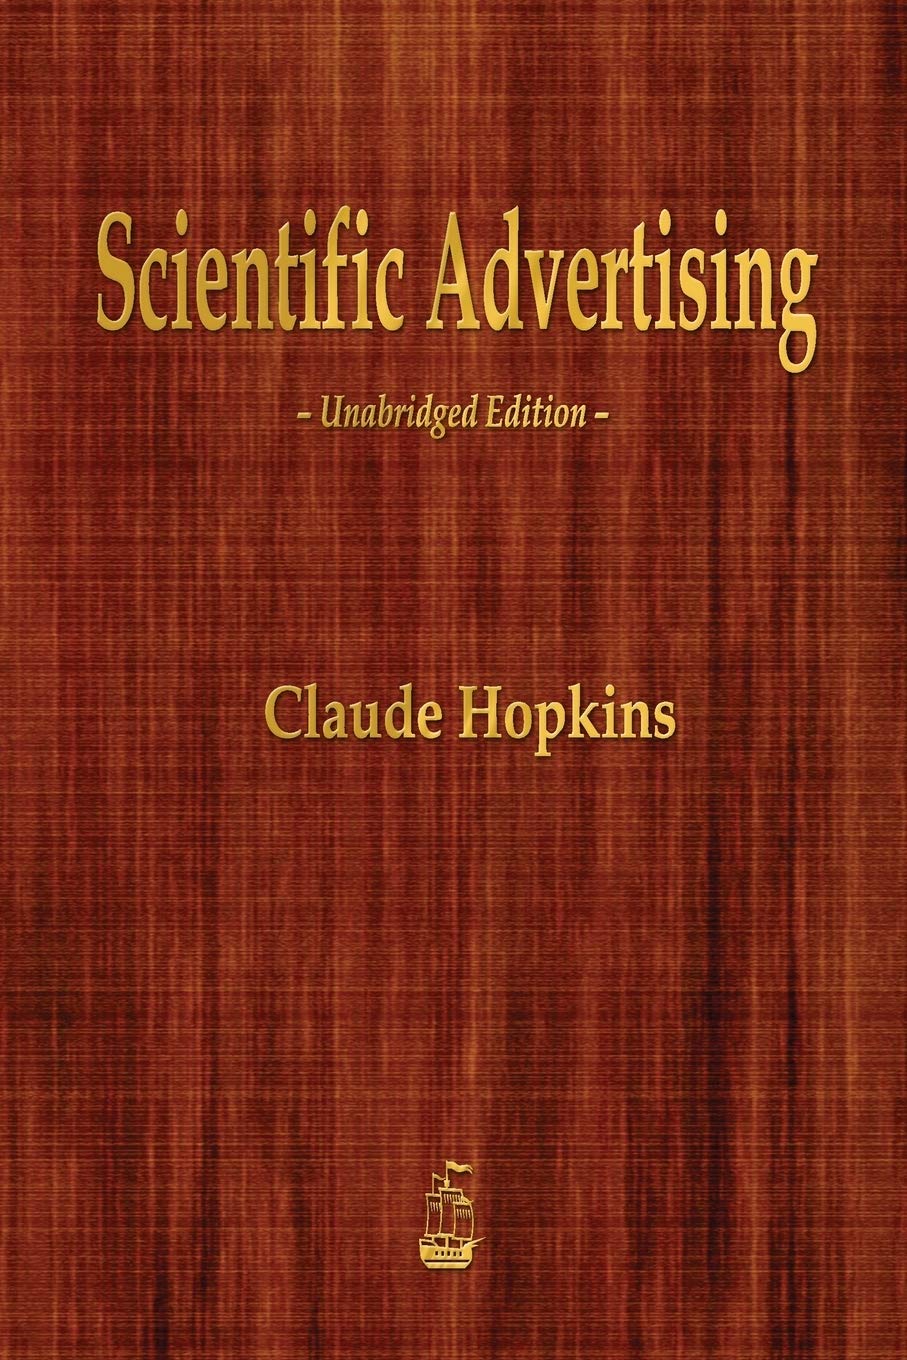 Scientific Advertising by Claude Hopkins